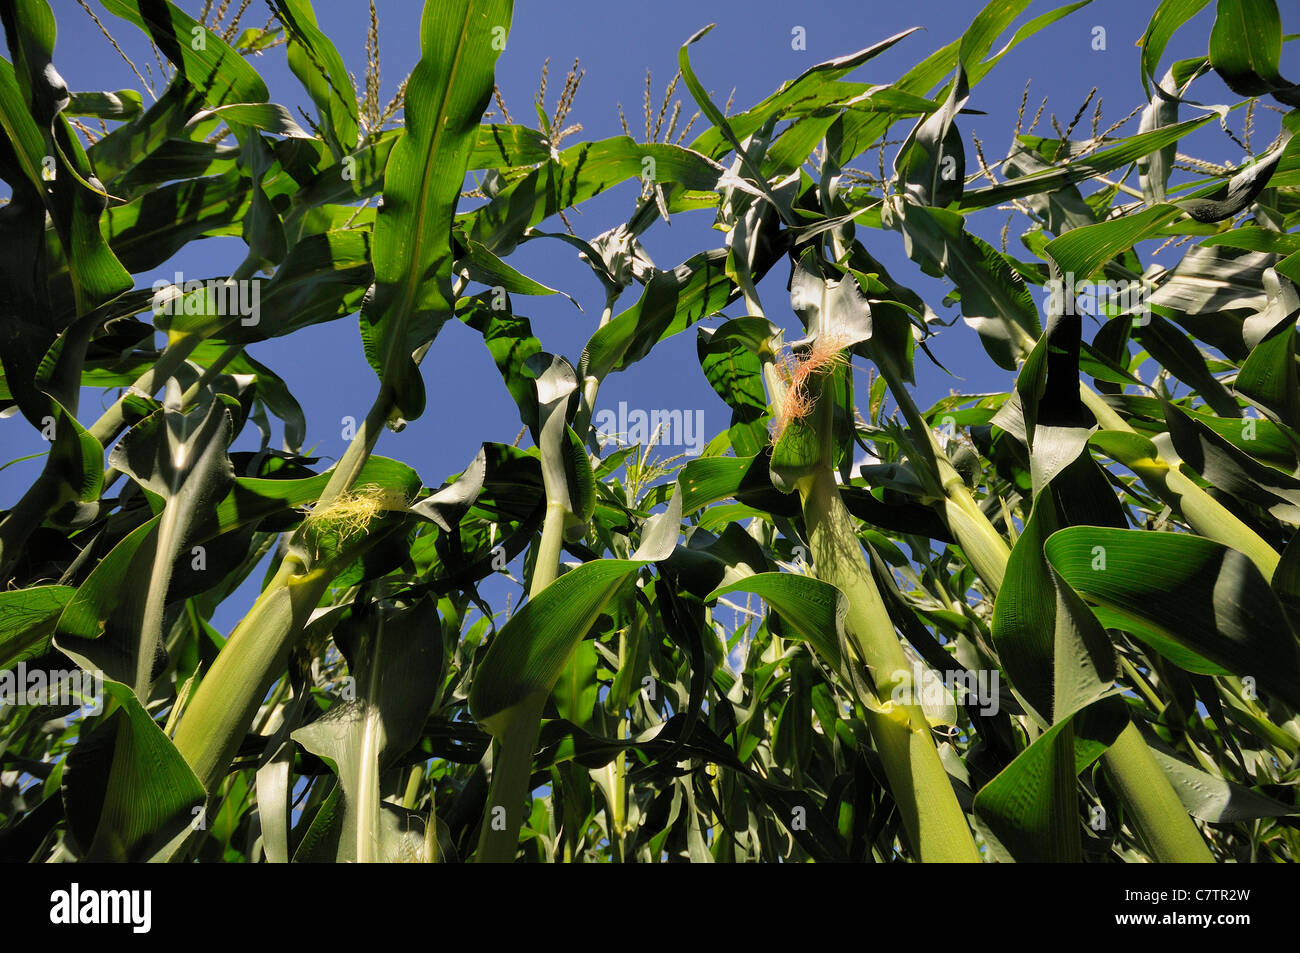 Inside a corn field looking up through the corn in Saskatchewan, Canada. Stock Photo